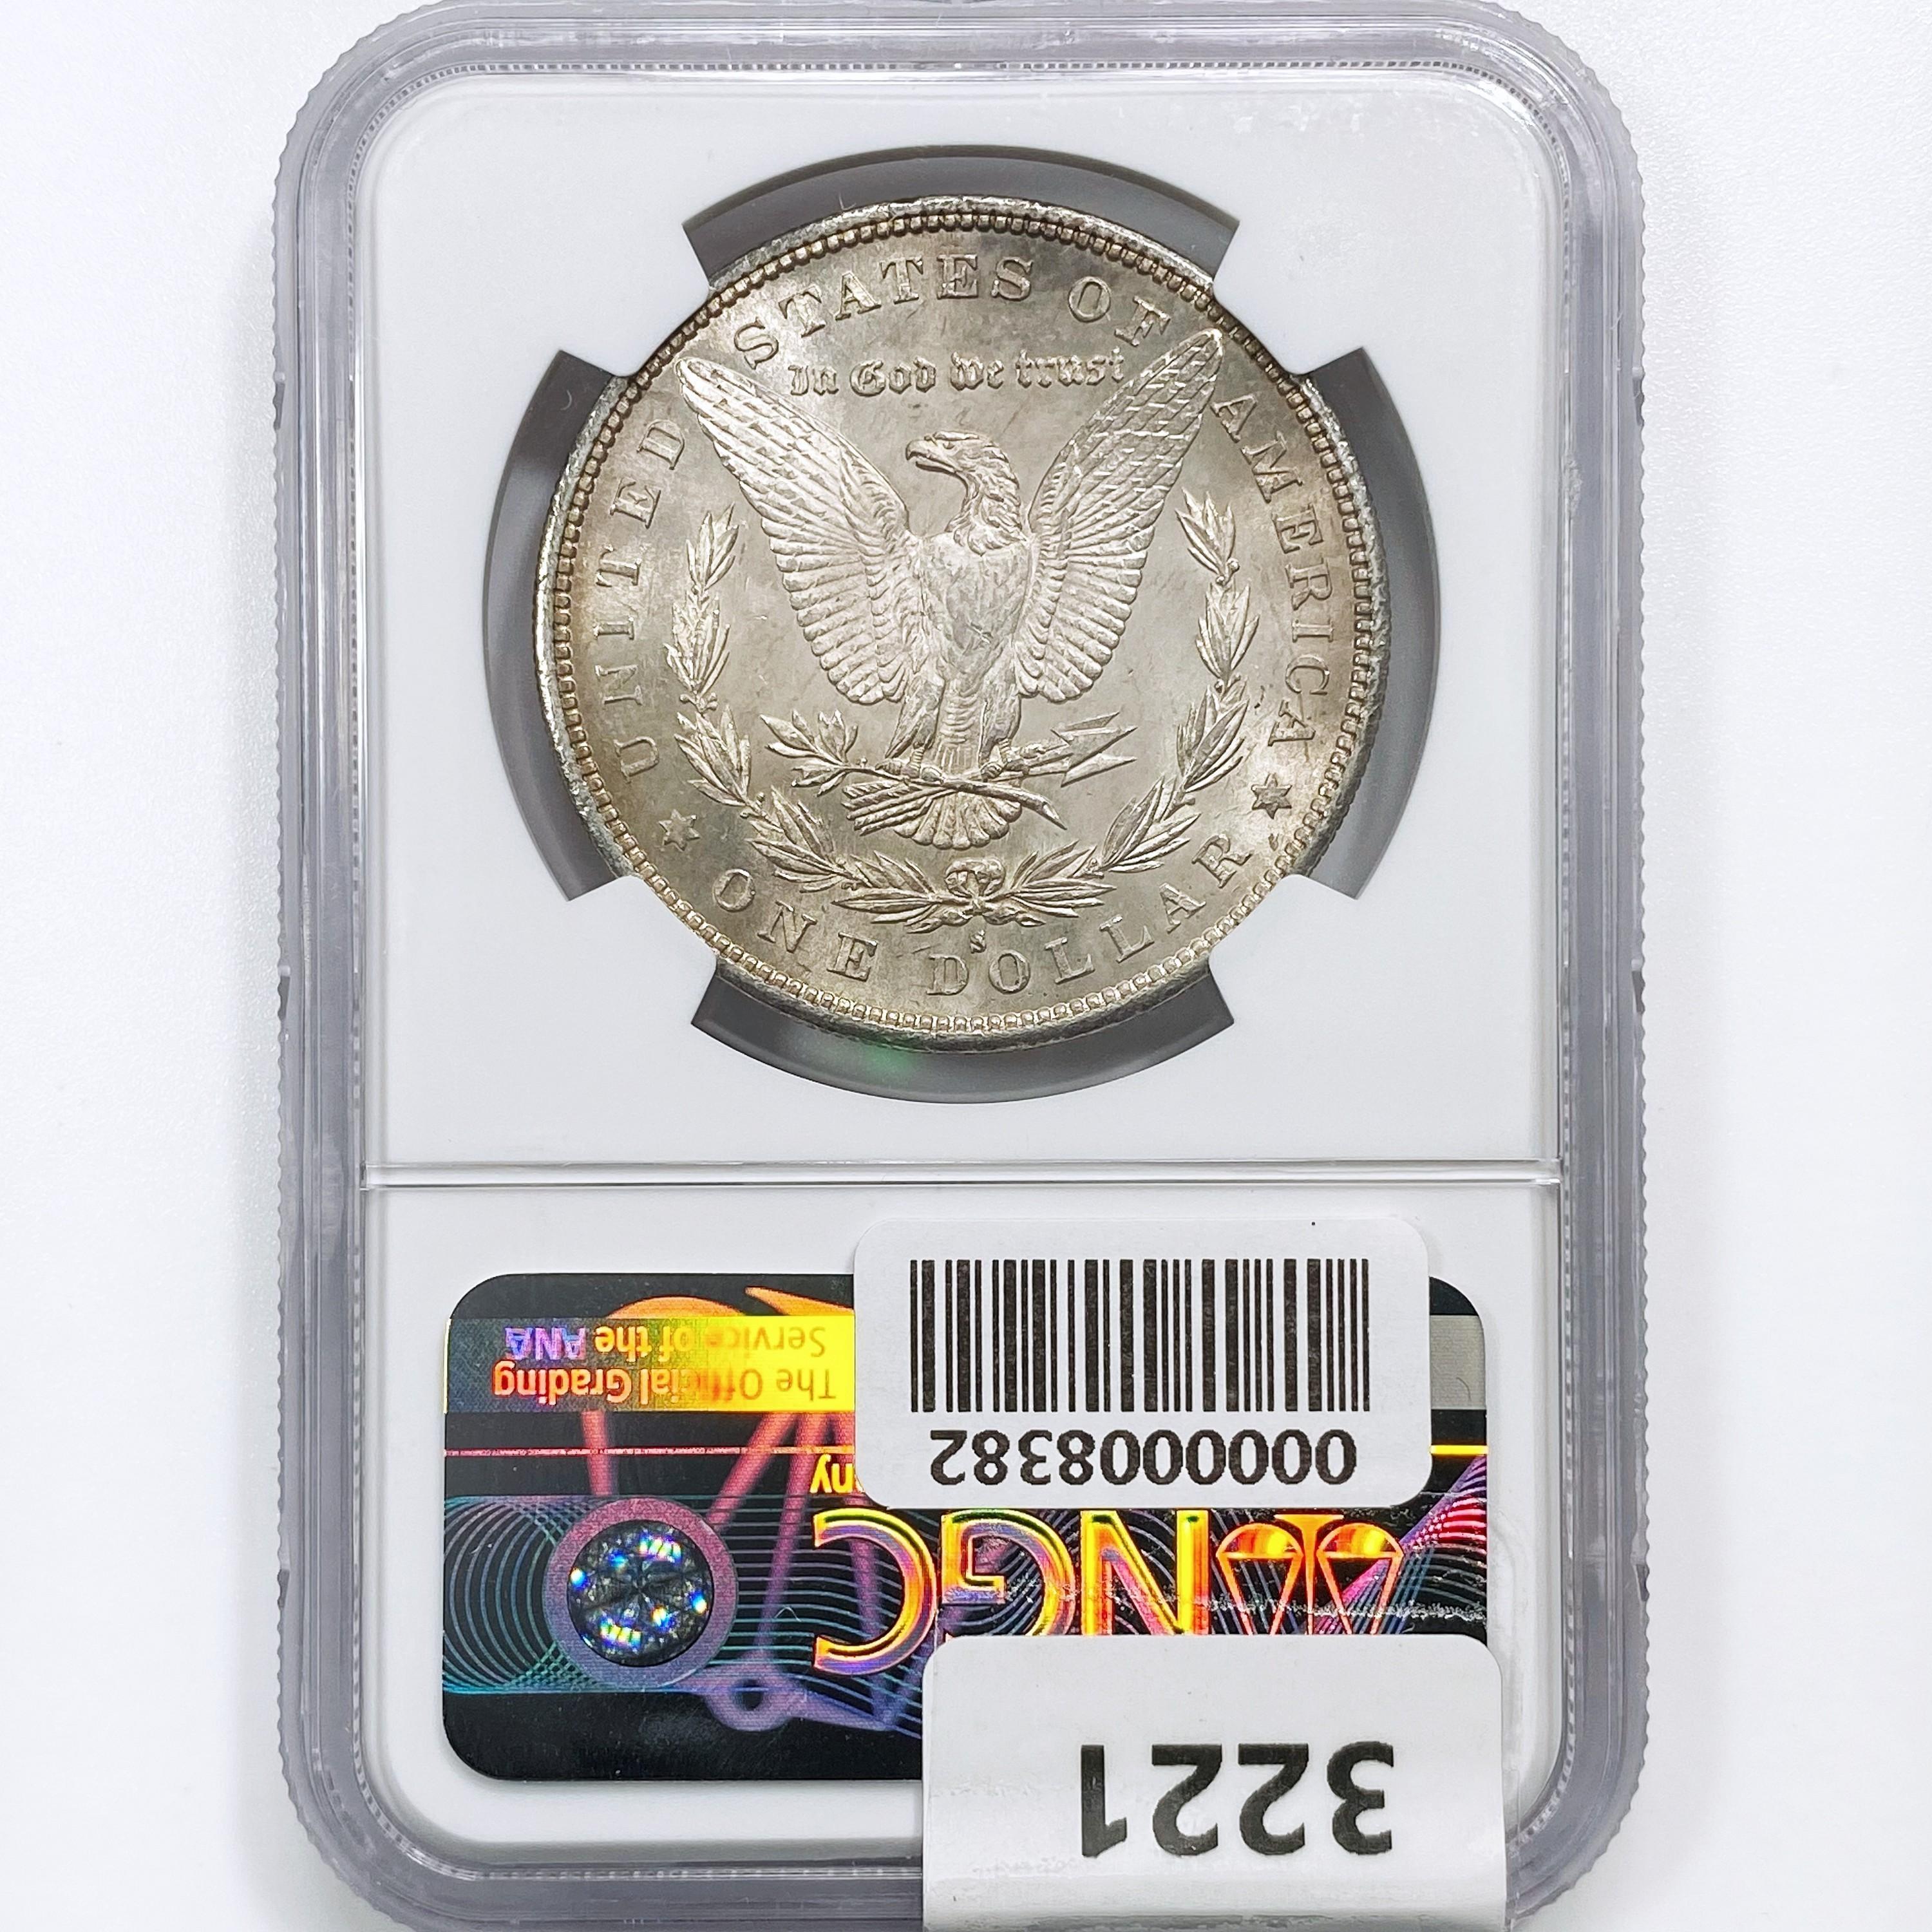 1880-S Morgan Silver Dollar NGC MS66